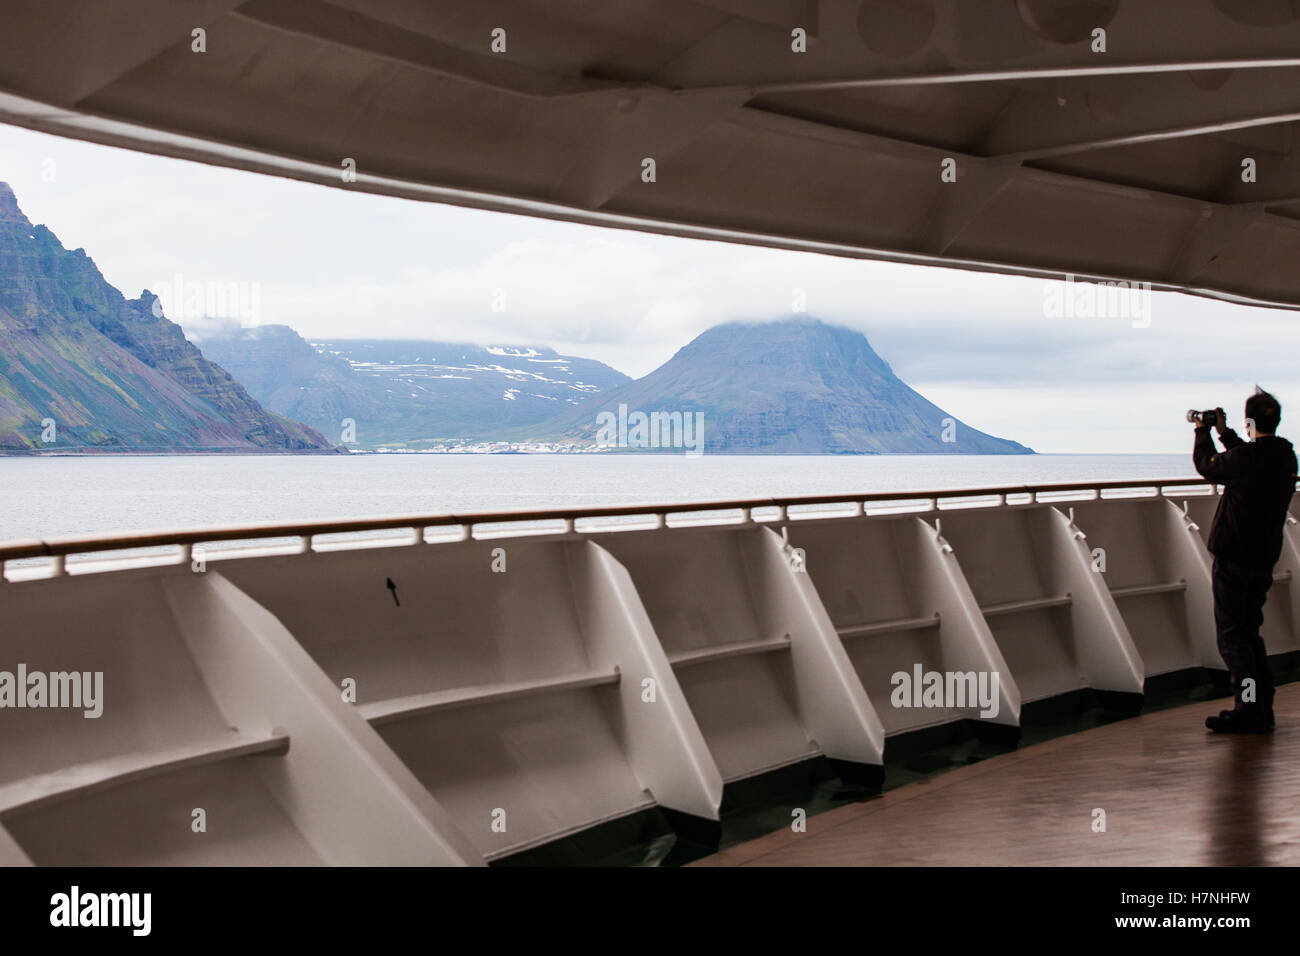 P&O Cruise Ship Azura anchored off Isafjordur, Iceland Stock Photo